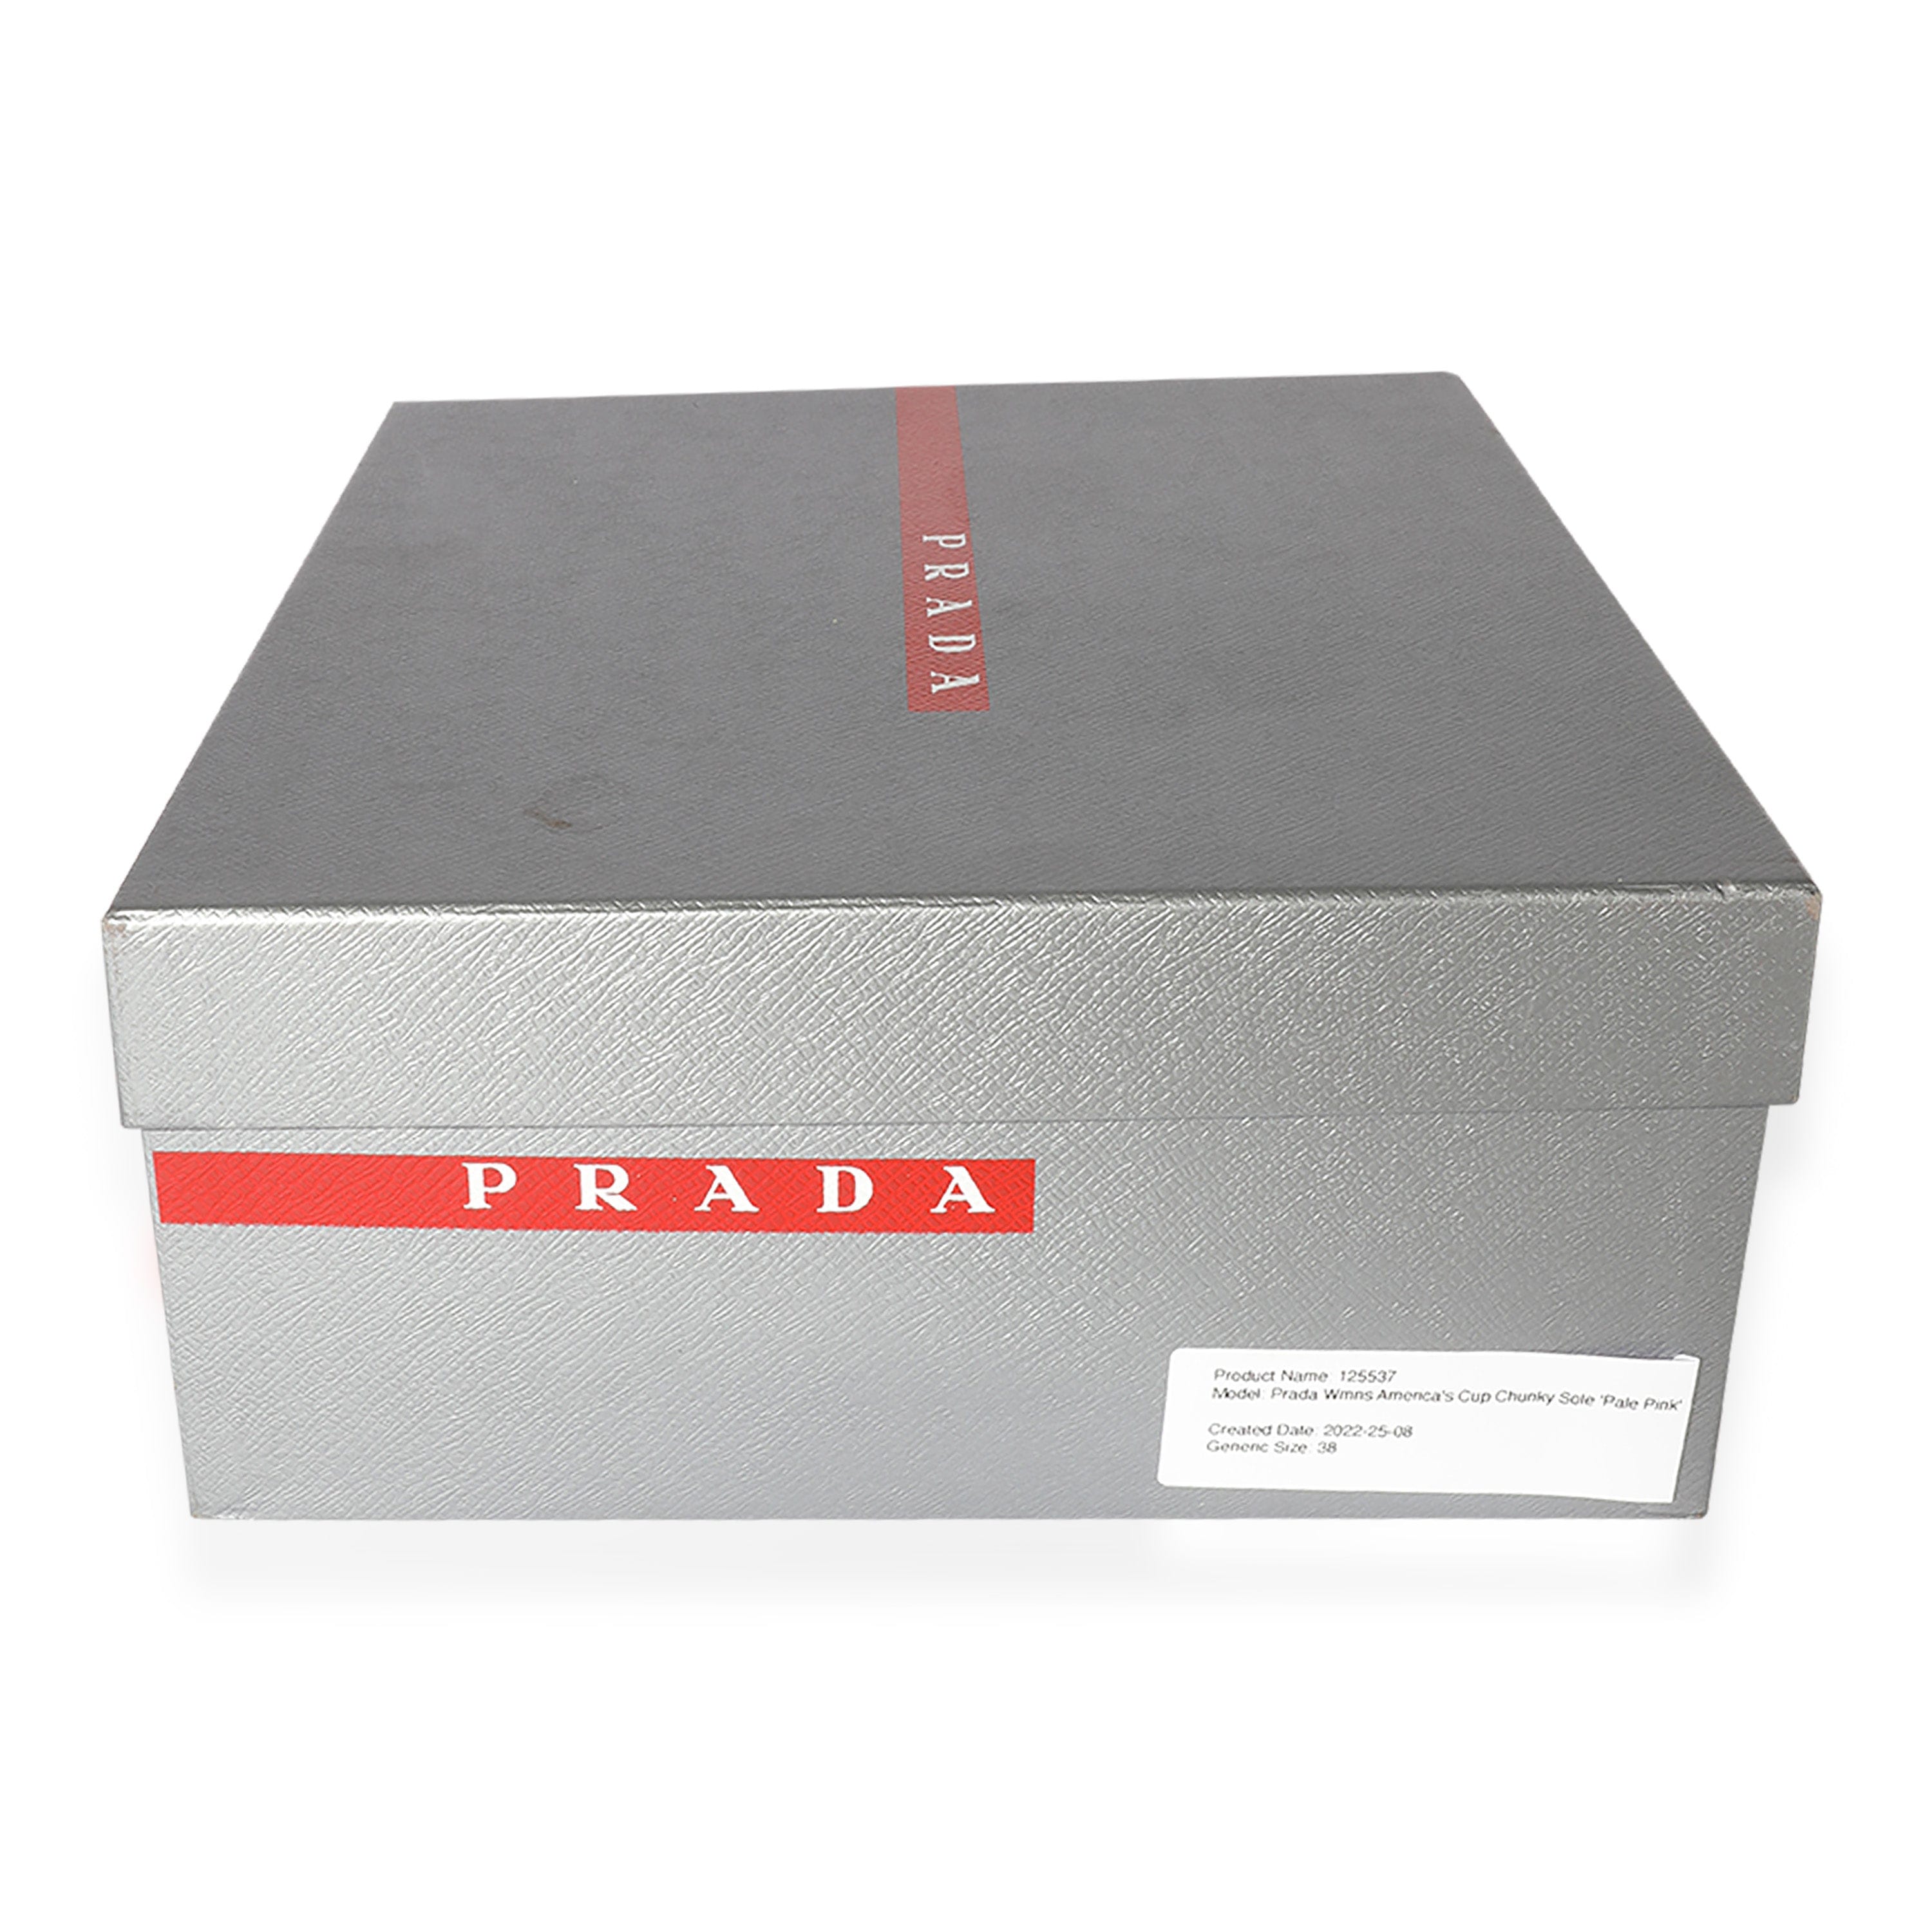 Prada Prada Wmns America's Cup Chunky Sole 'Pale Pink'